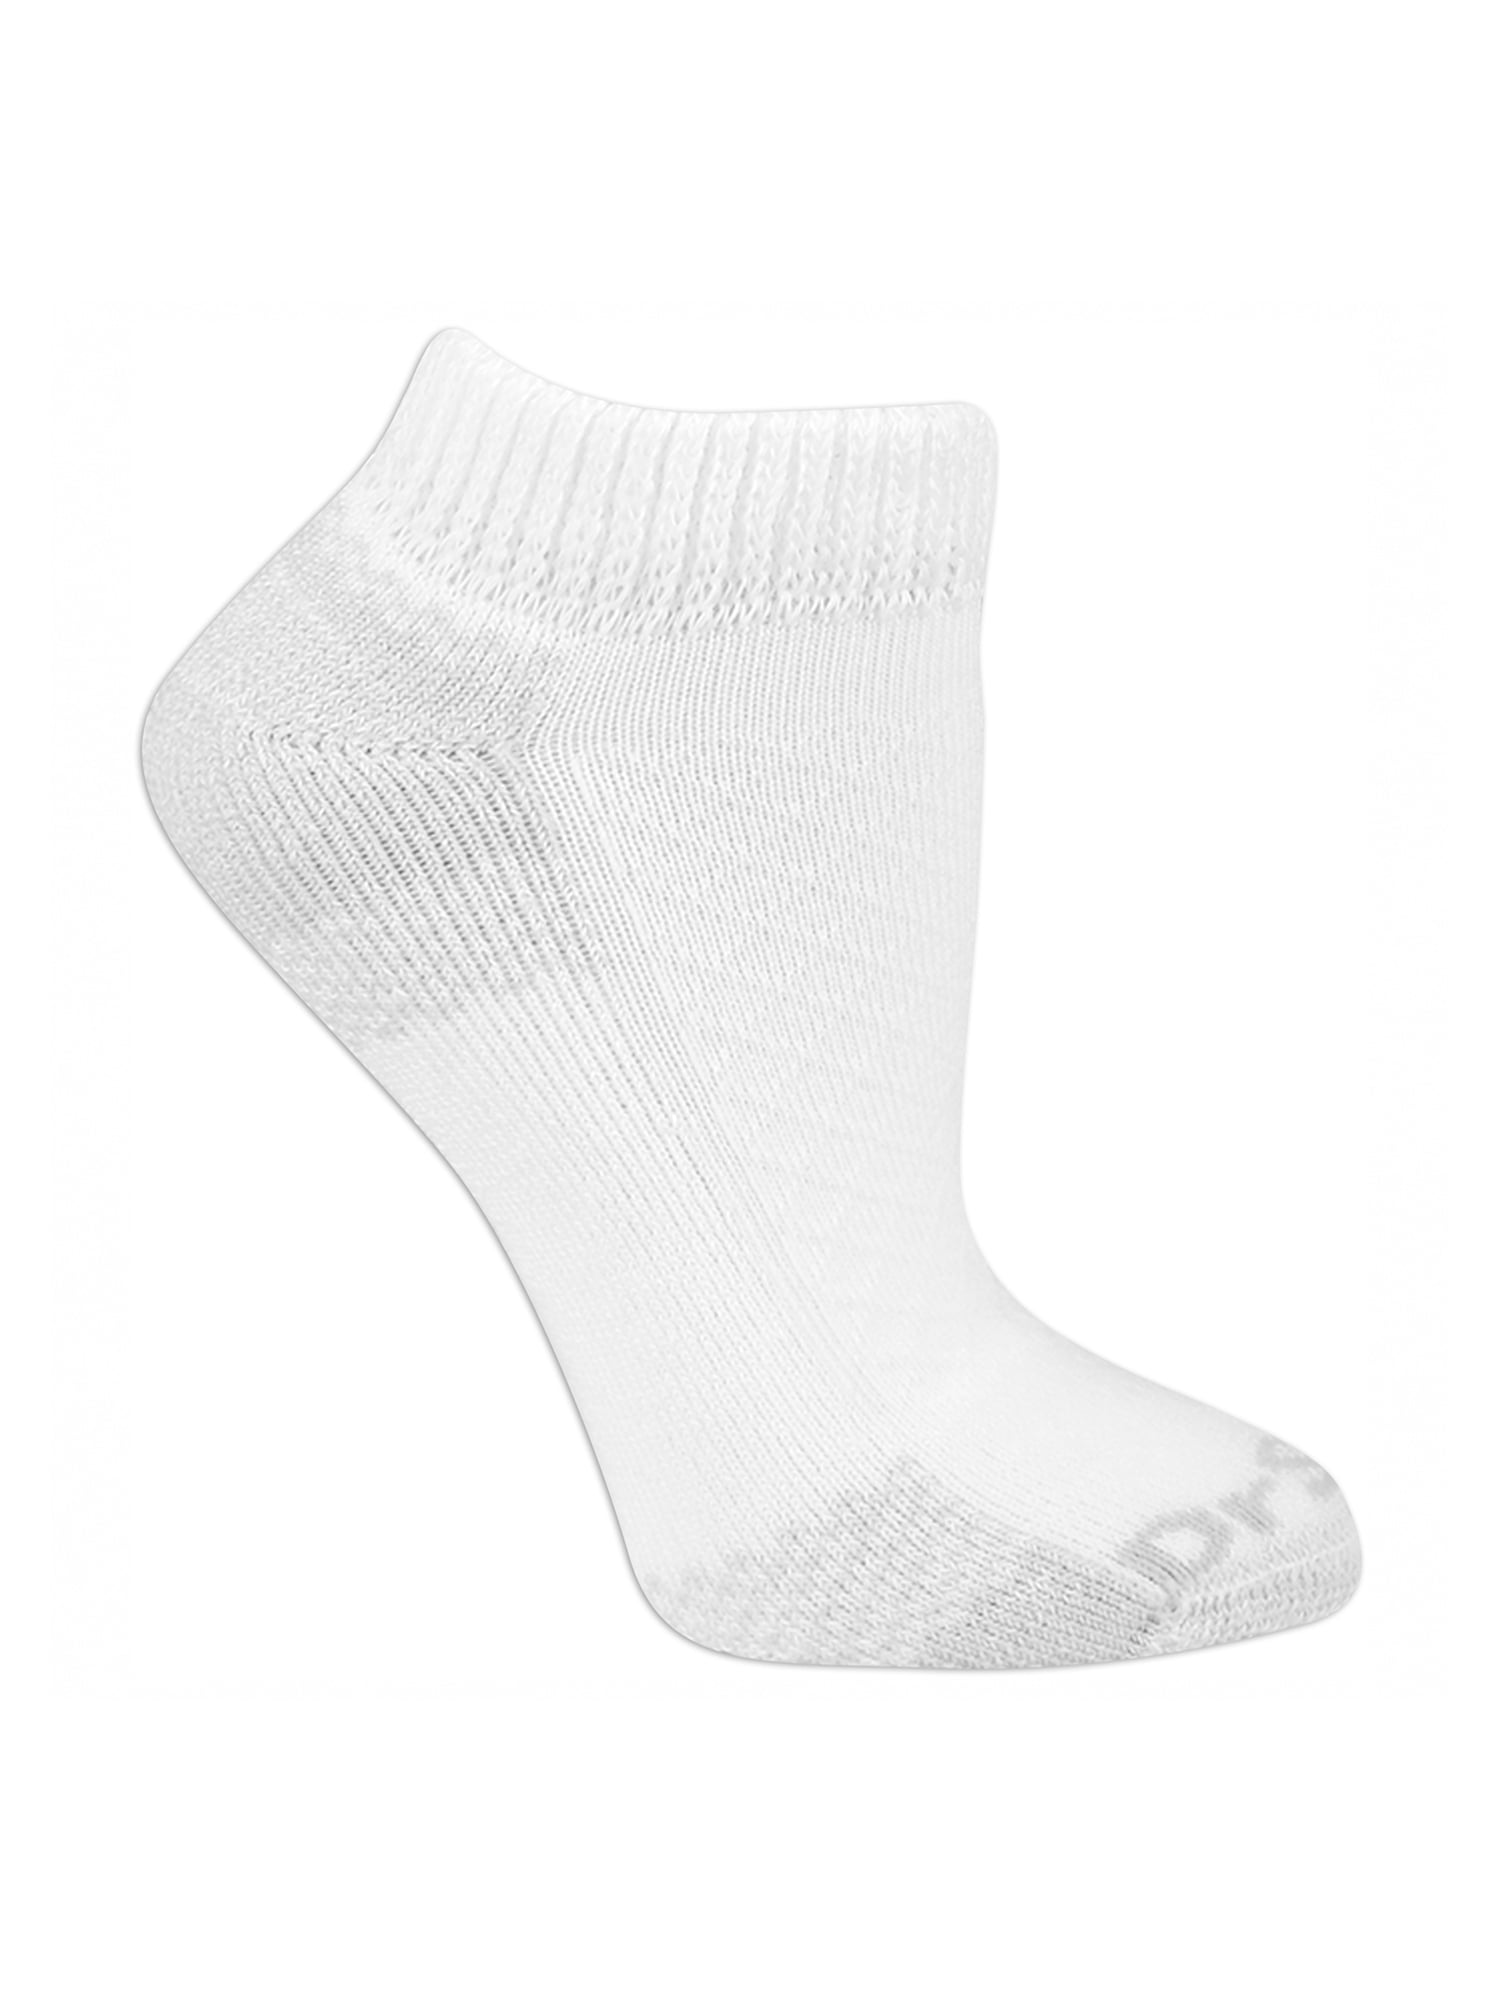 Buy Dr. Scholl's Women's Advanced Relief Blister Guard Low Cut Socks, 3 ...